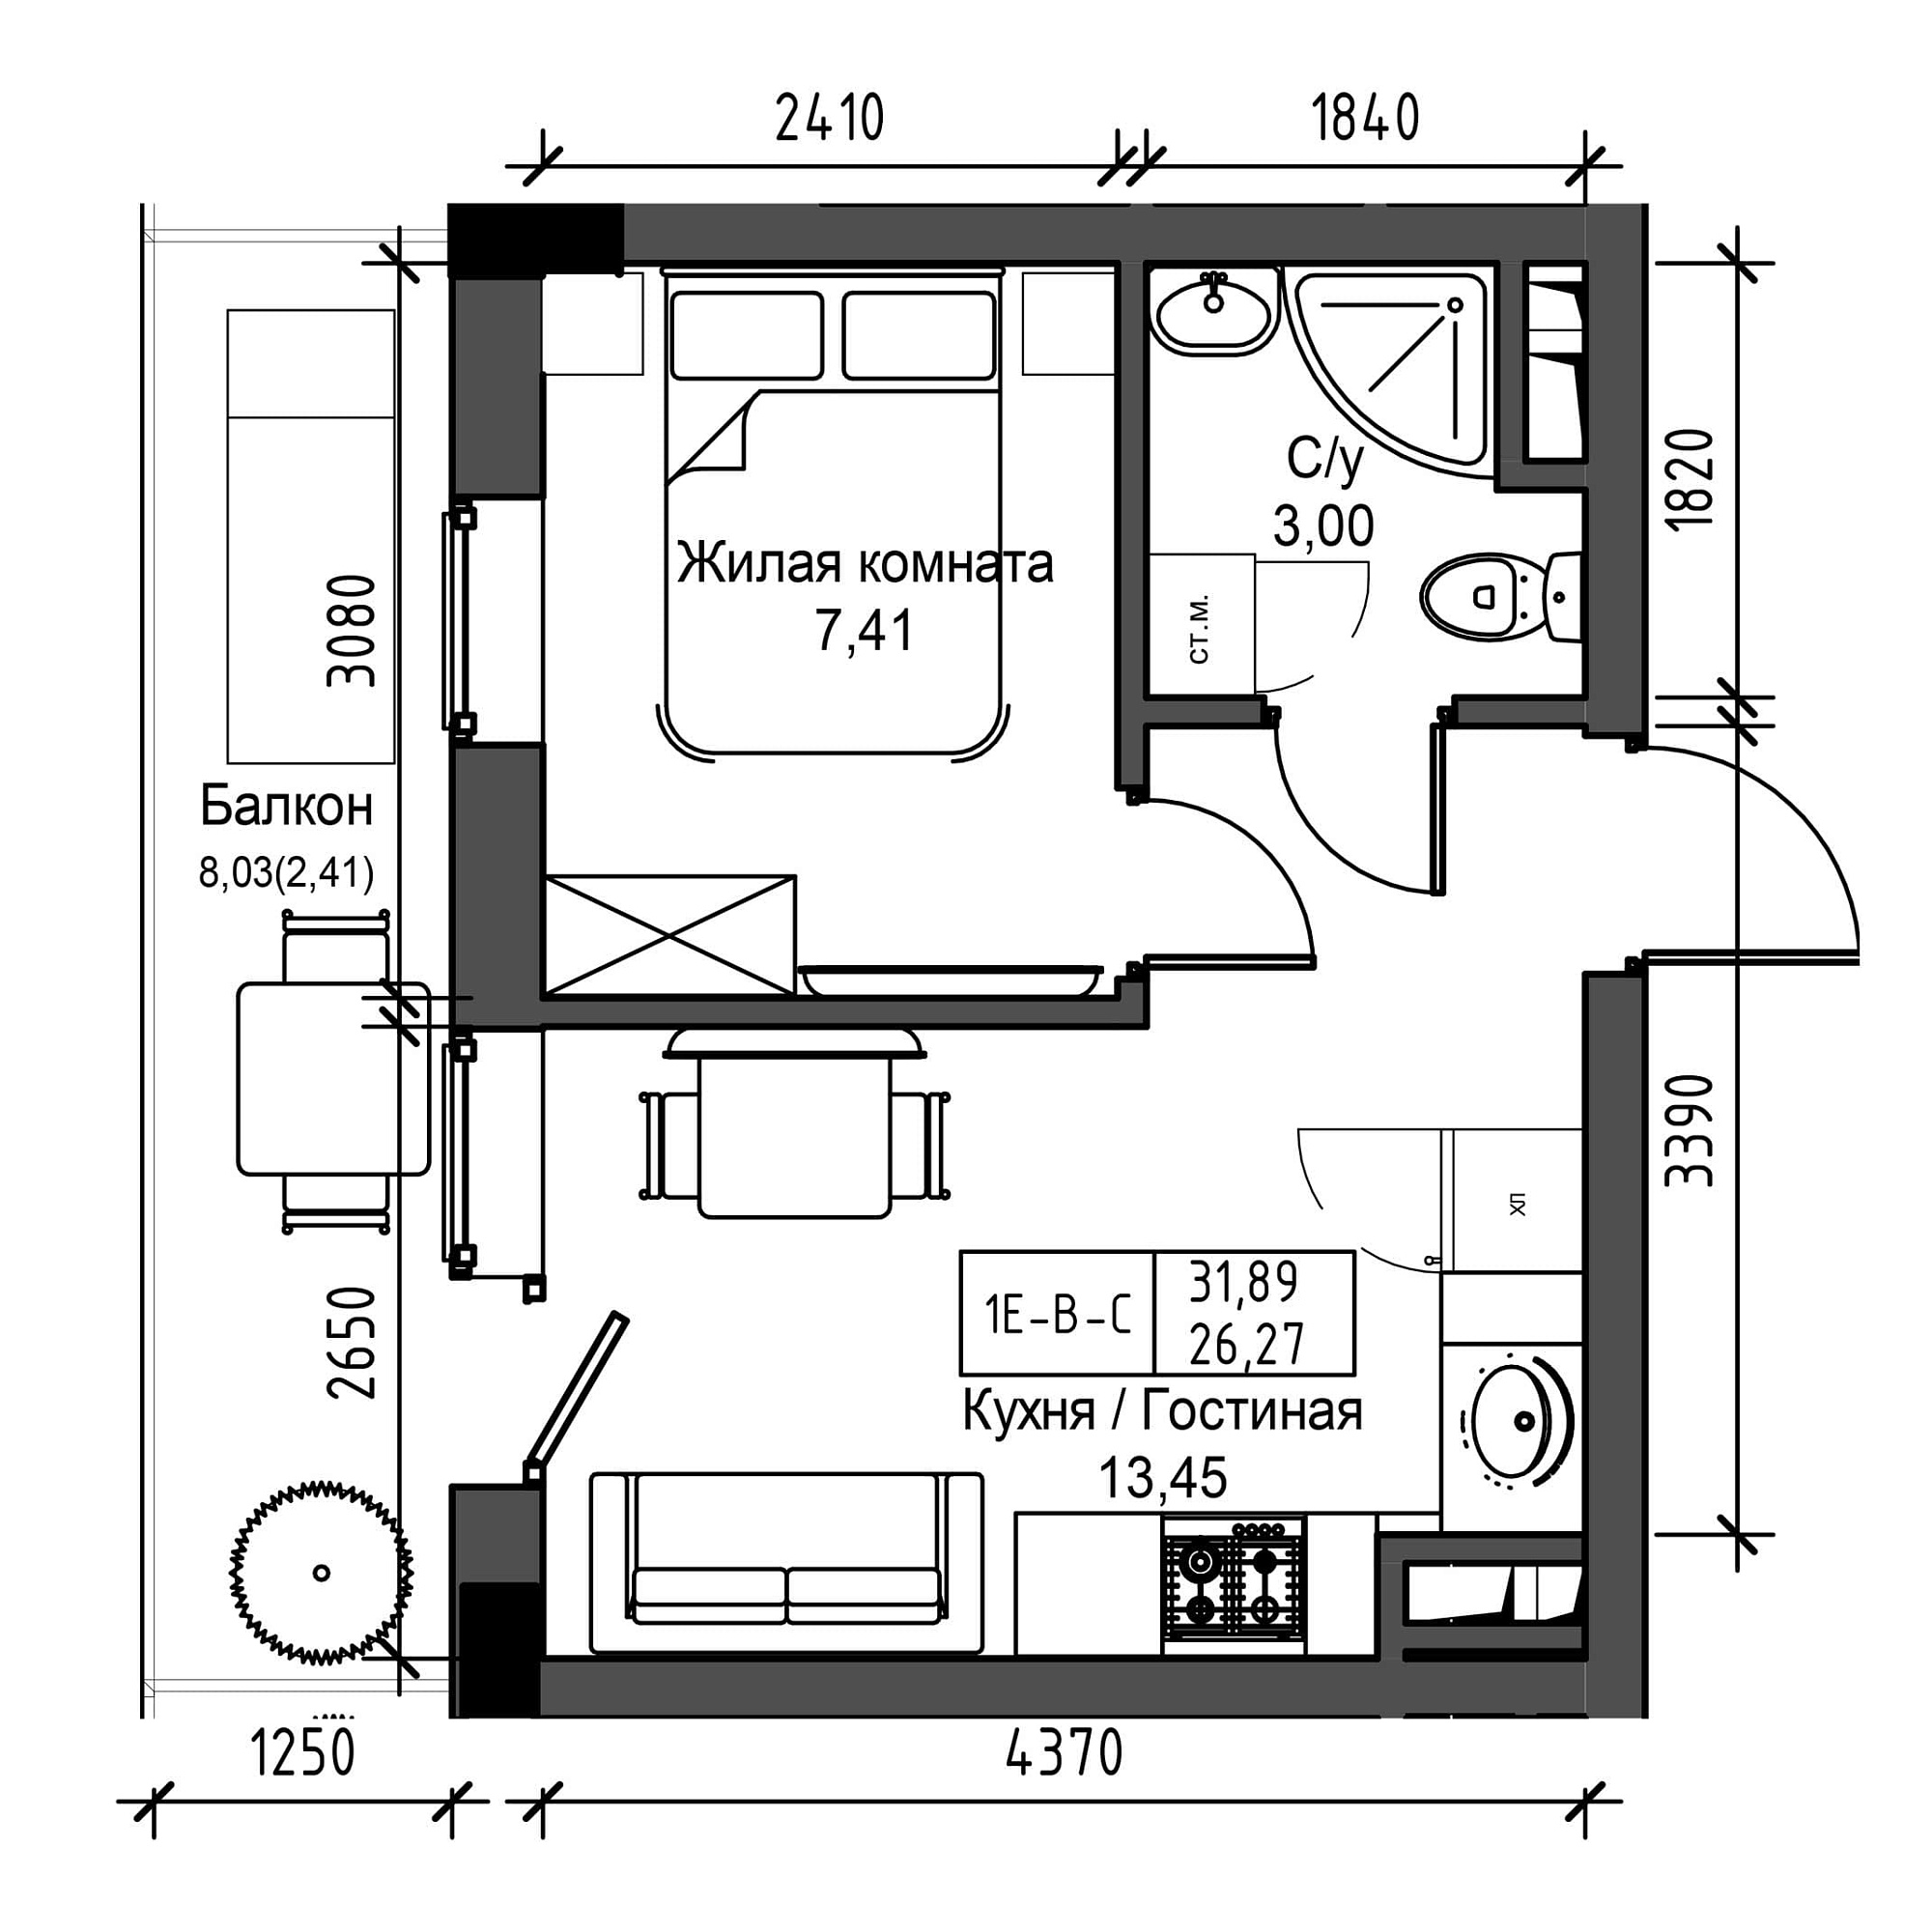 Planning 1-rm flats area 26.27m2, UM-001-06/0015.